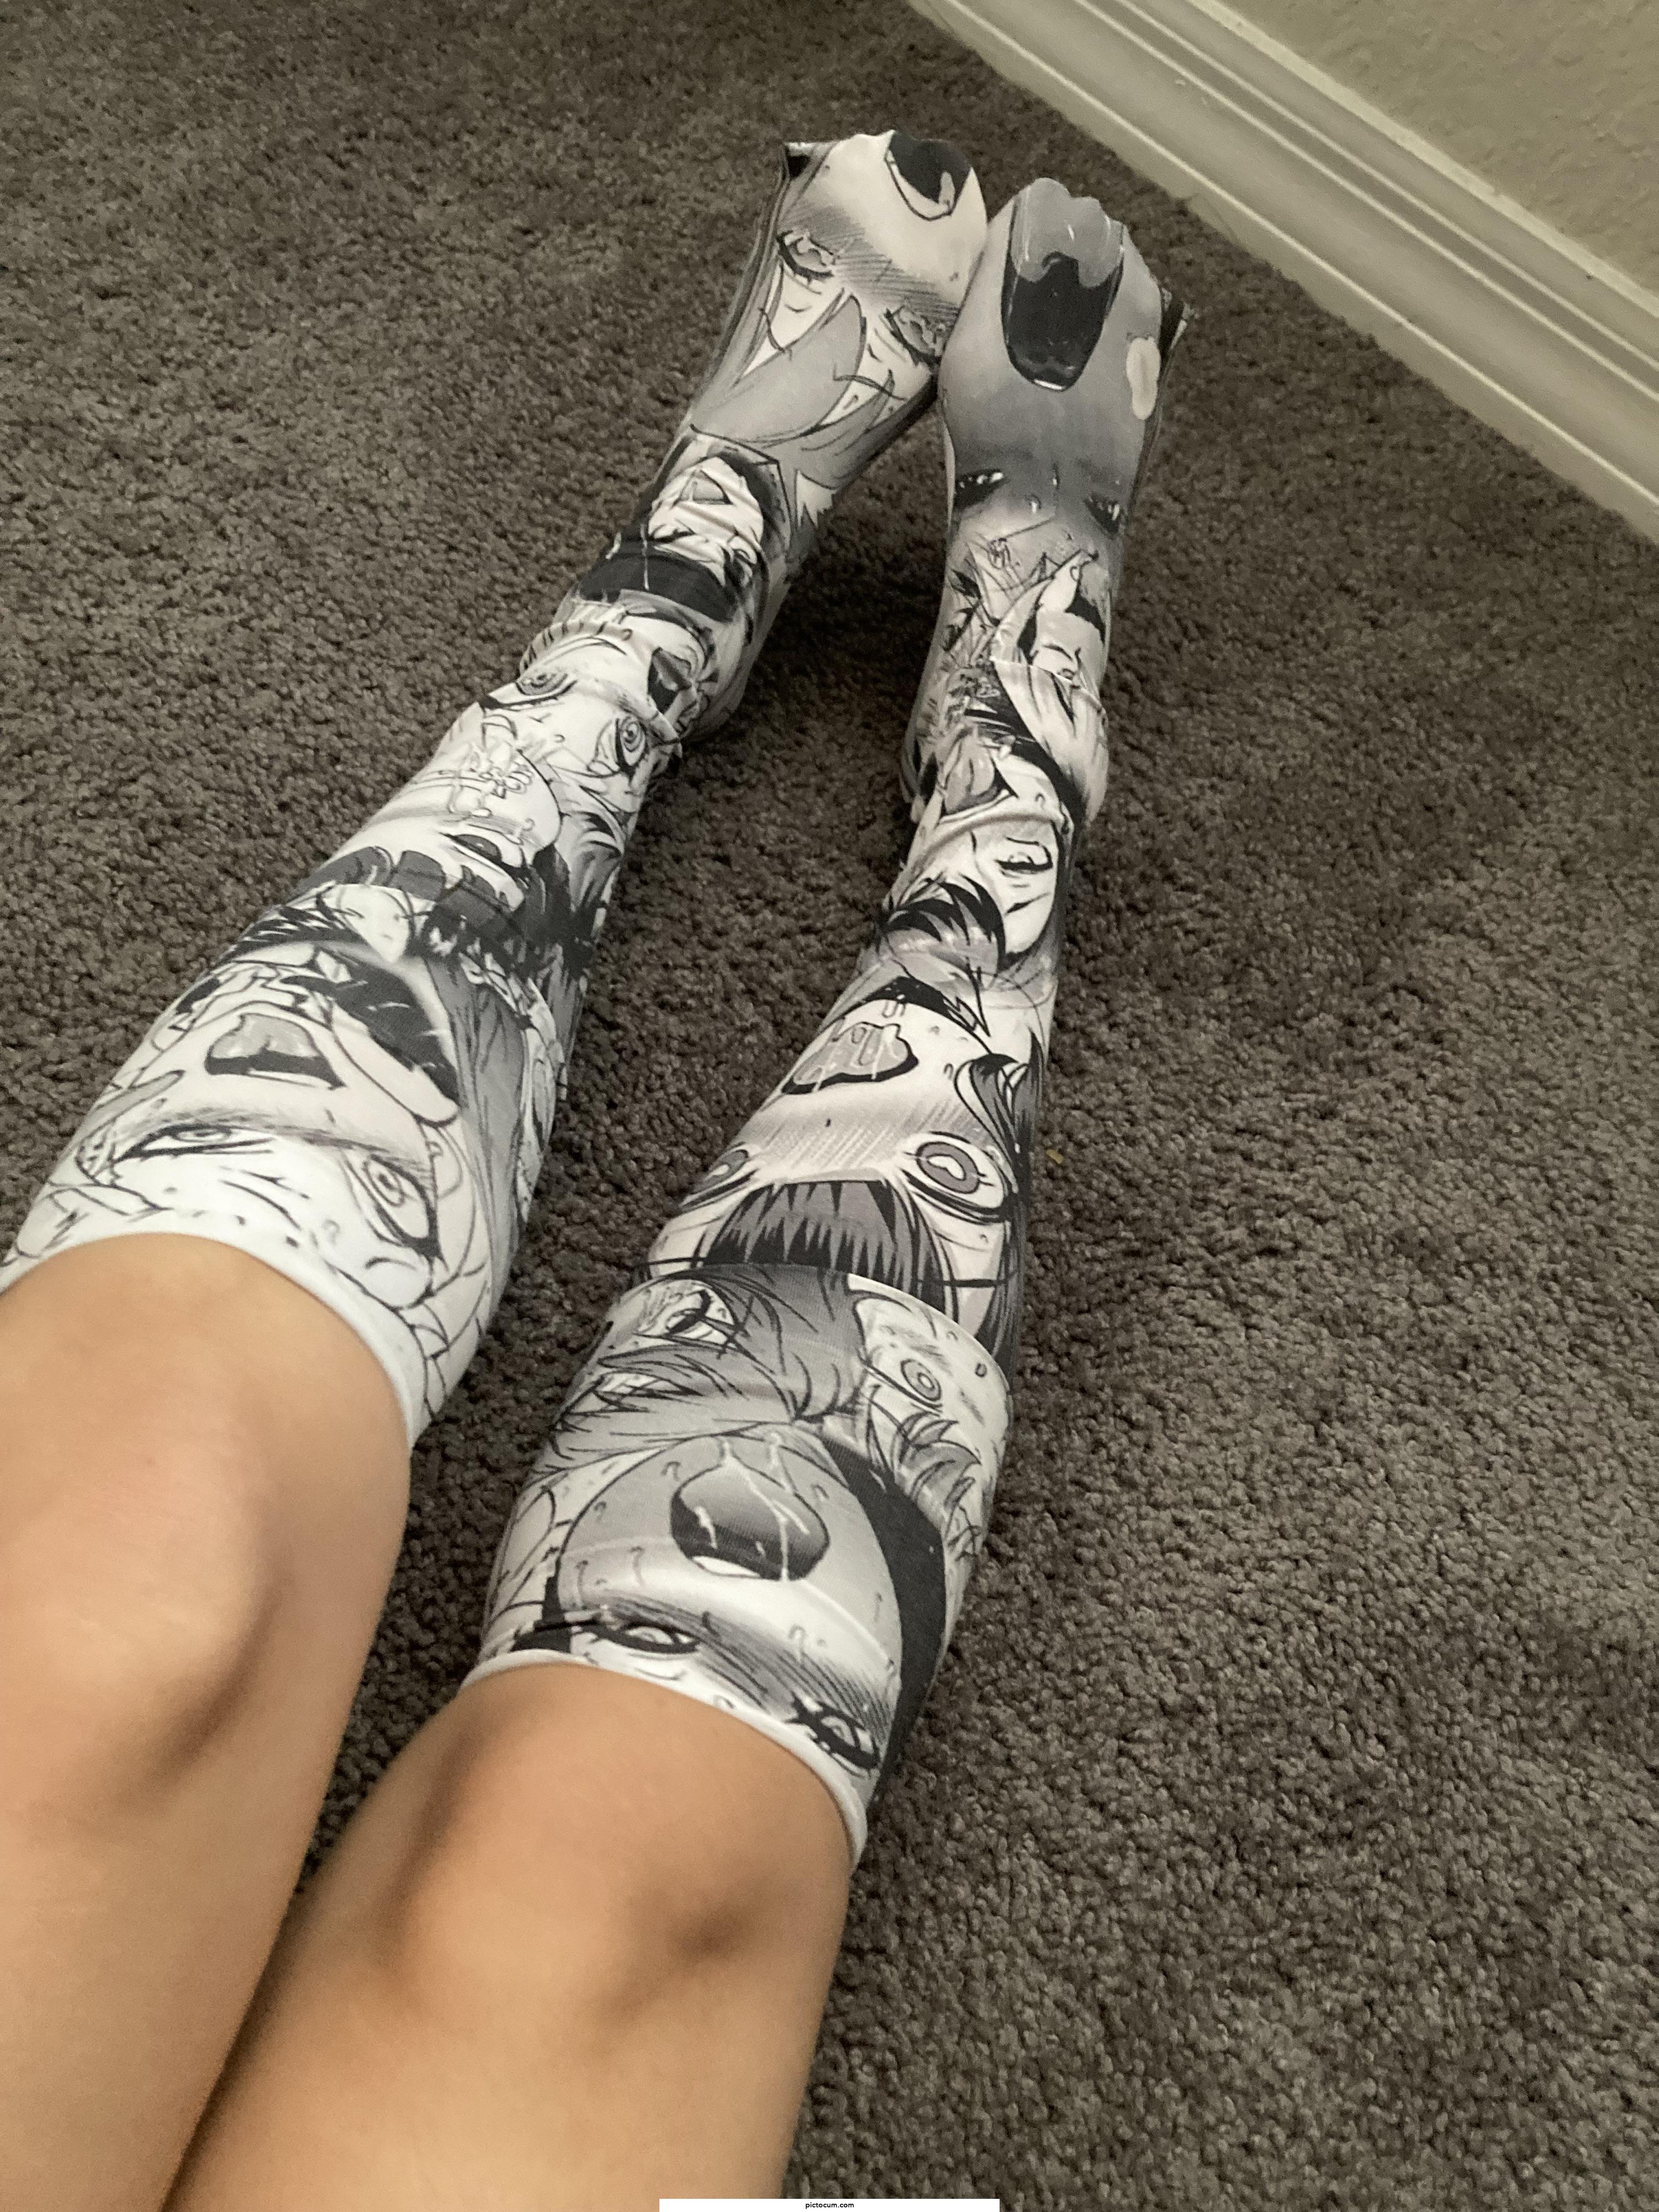 Like my socks? 💗